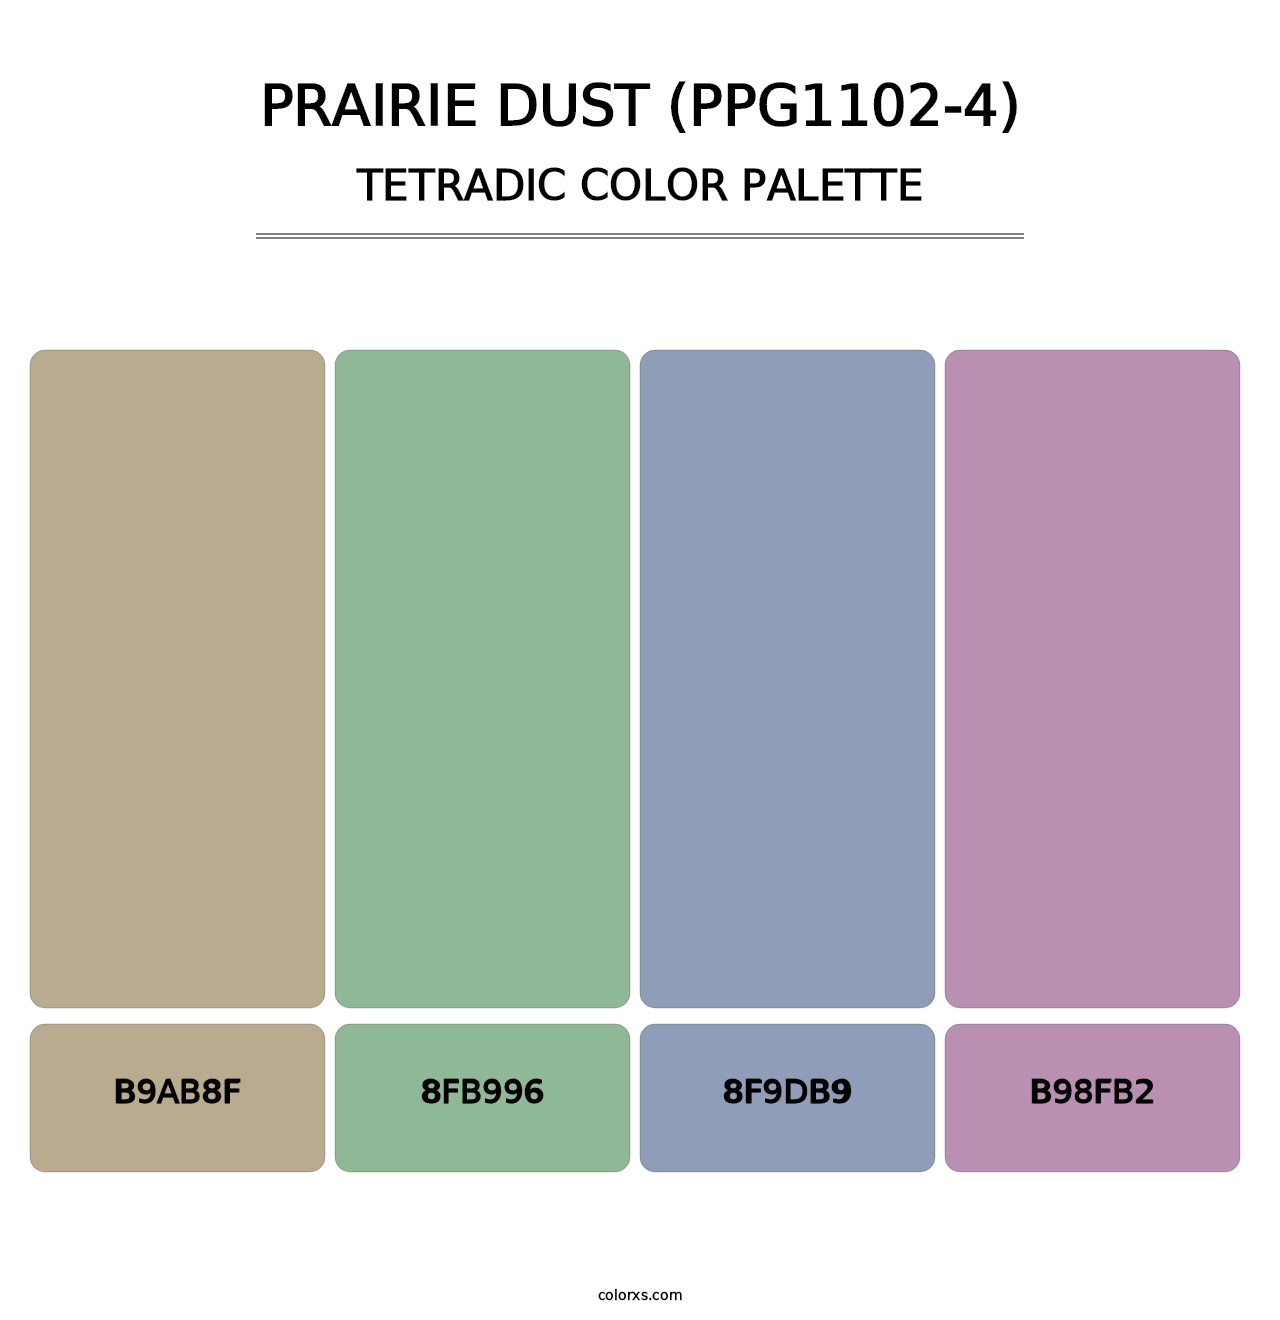 Prairie Dust (PPG1102-4) - Tetradic Color Palette